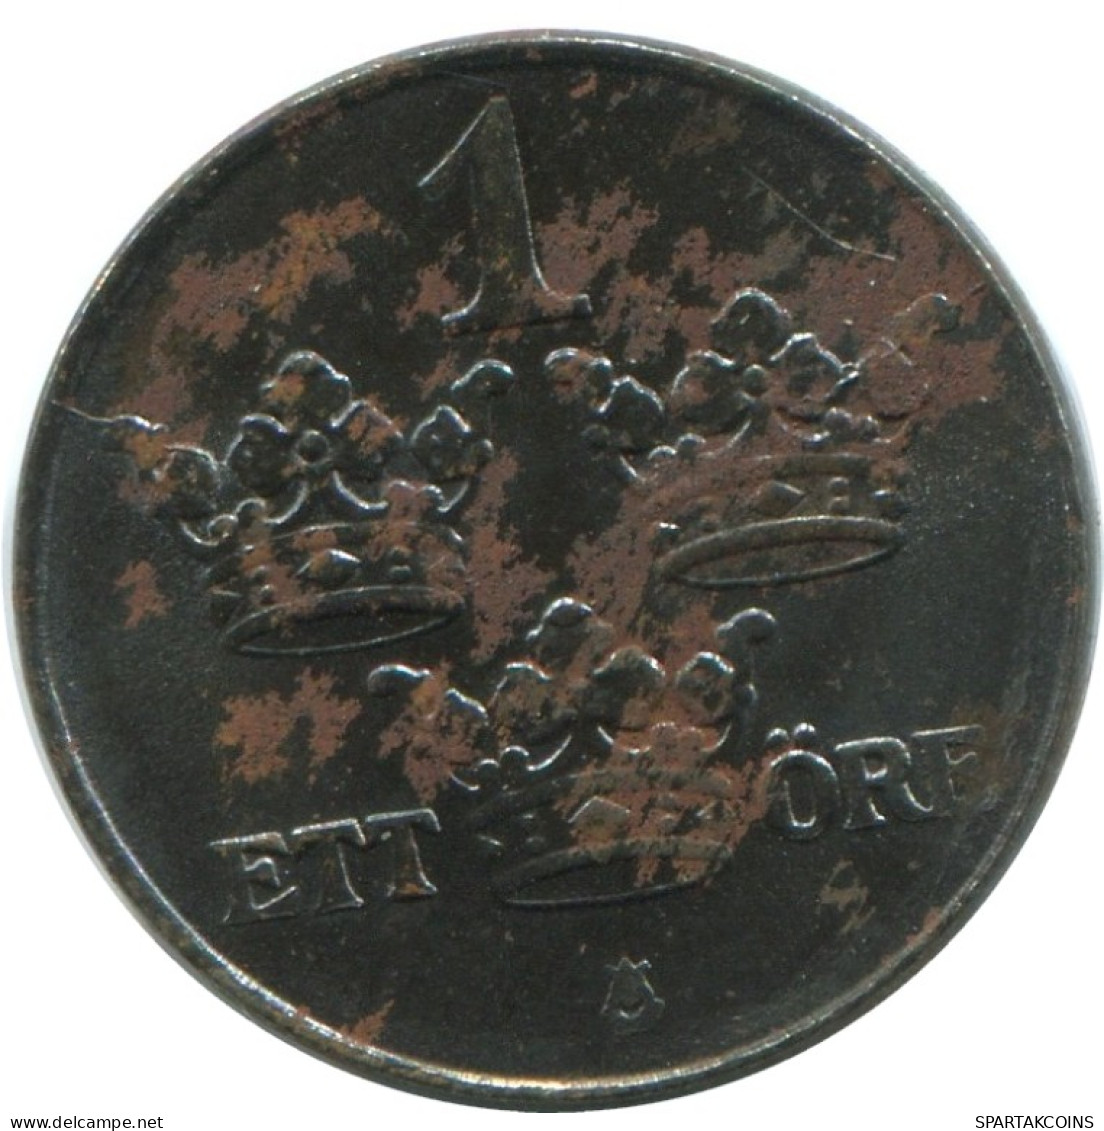 1 ORE 1947 SWEDEN Coin #AD259.2.U.A - Sweden